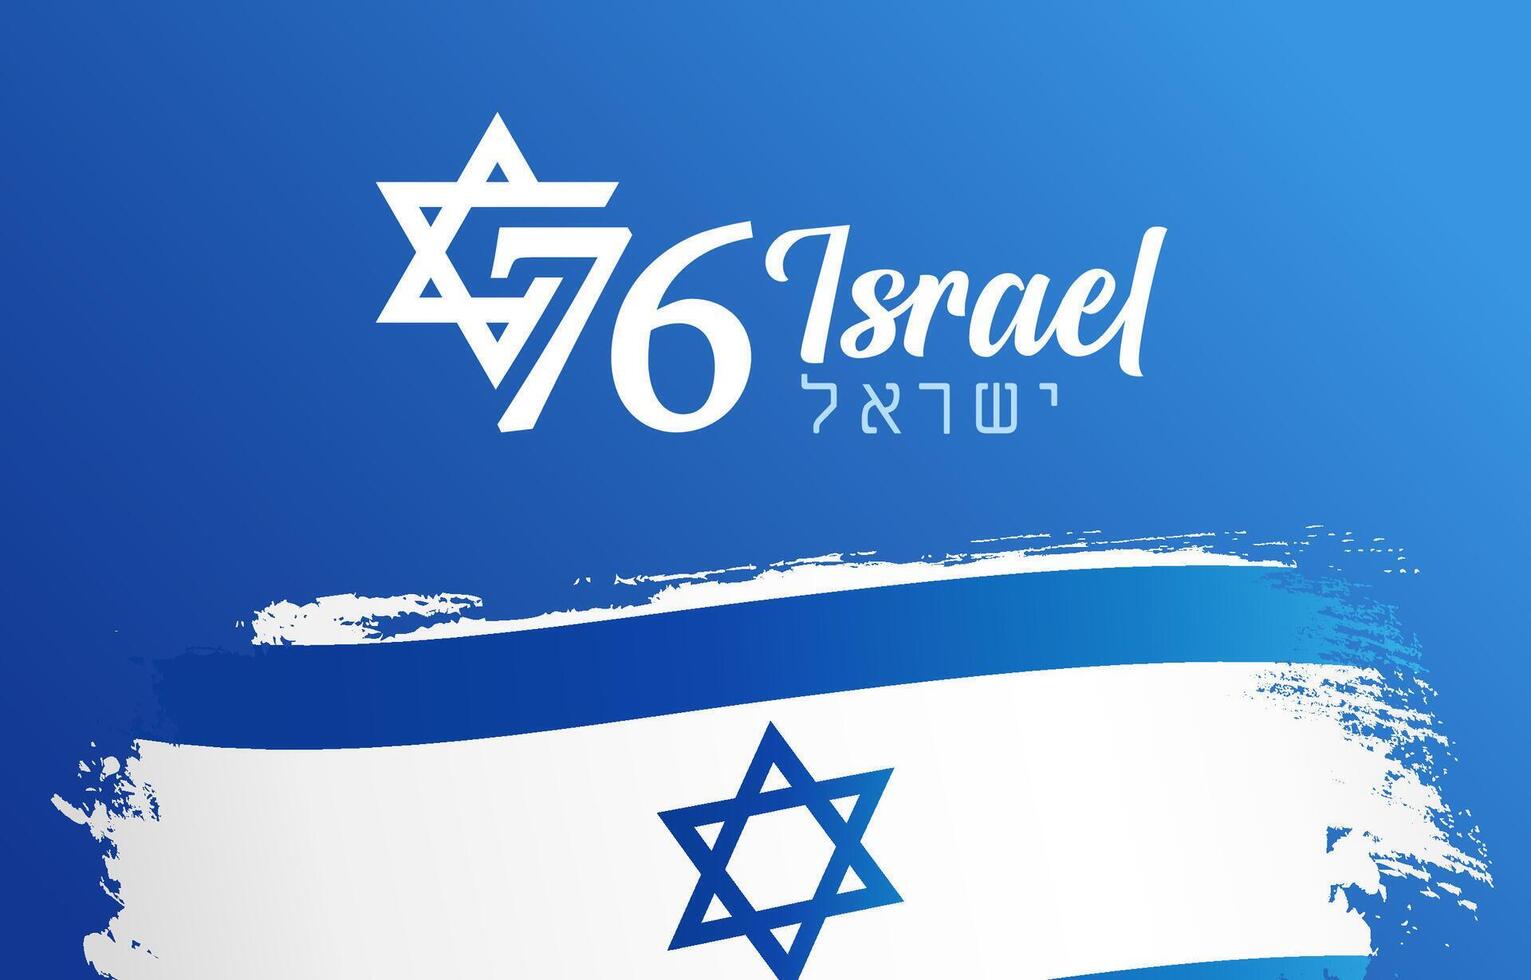 contento independencia día de Israel saludo tarjeta concepto. 76º aniversario bandera. cartelera modelo con cepillo carrera estilo bandera. creativo diseño. nacional fiesta antecedentes. aislado elementos. vector